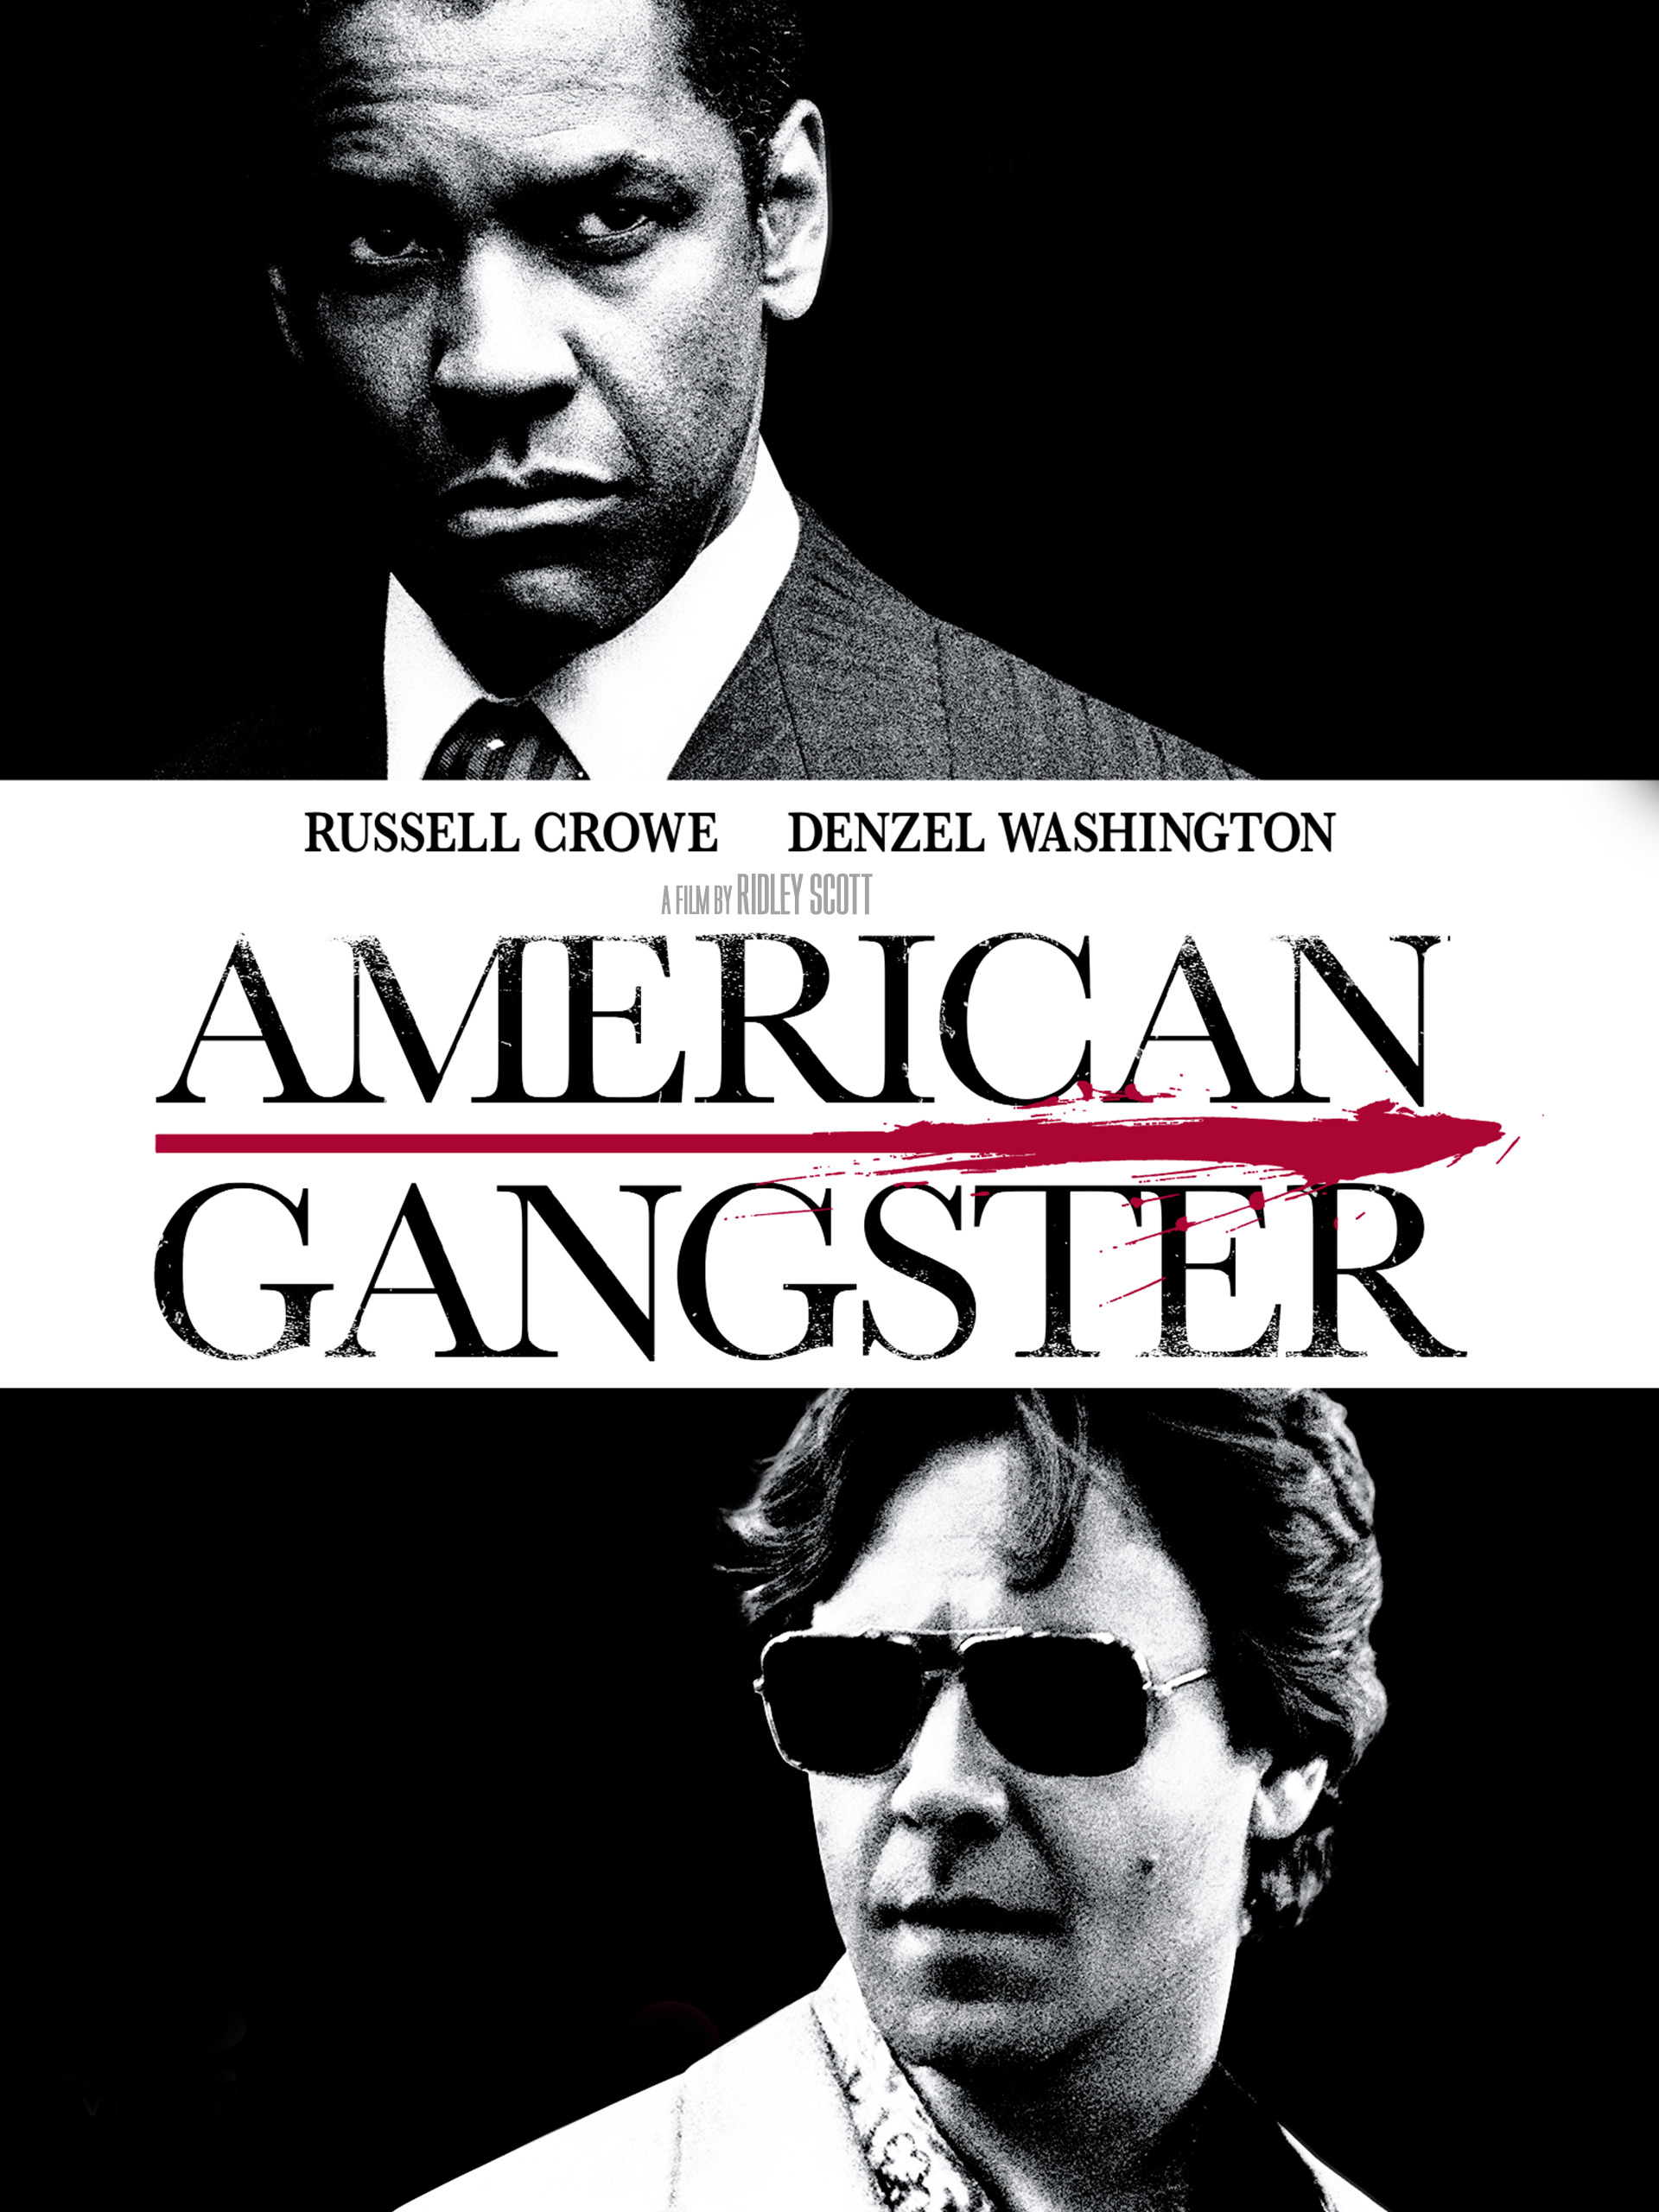 Stiahni si Filmy CZ/SK dabing Americky gangster / American Gangster (2007)(1080p)(CZ/EN/HU) = CSFD 87%